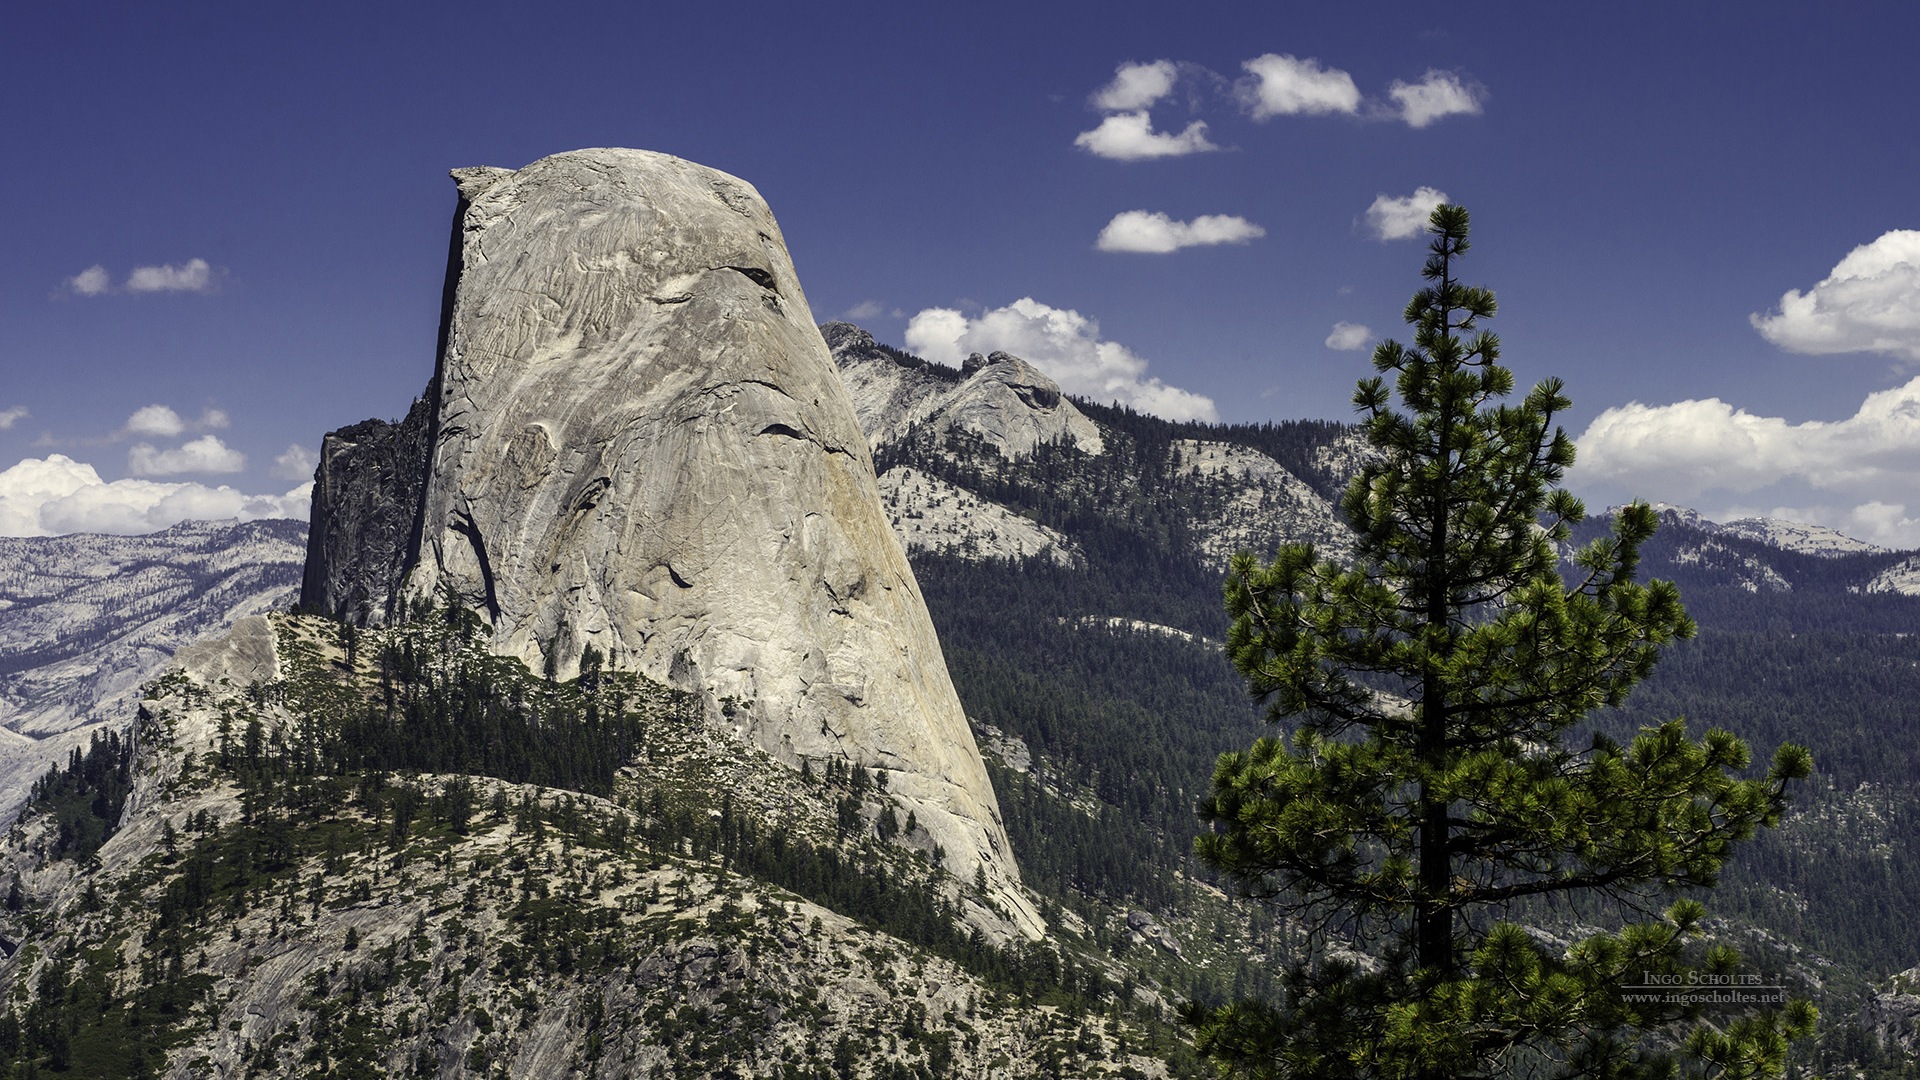 Windows 8 Thema, Yosemite National Park HD Wallpaper #13 - 1920x1080